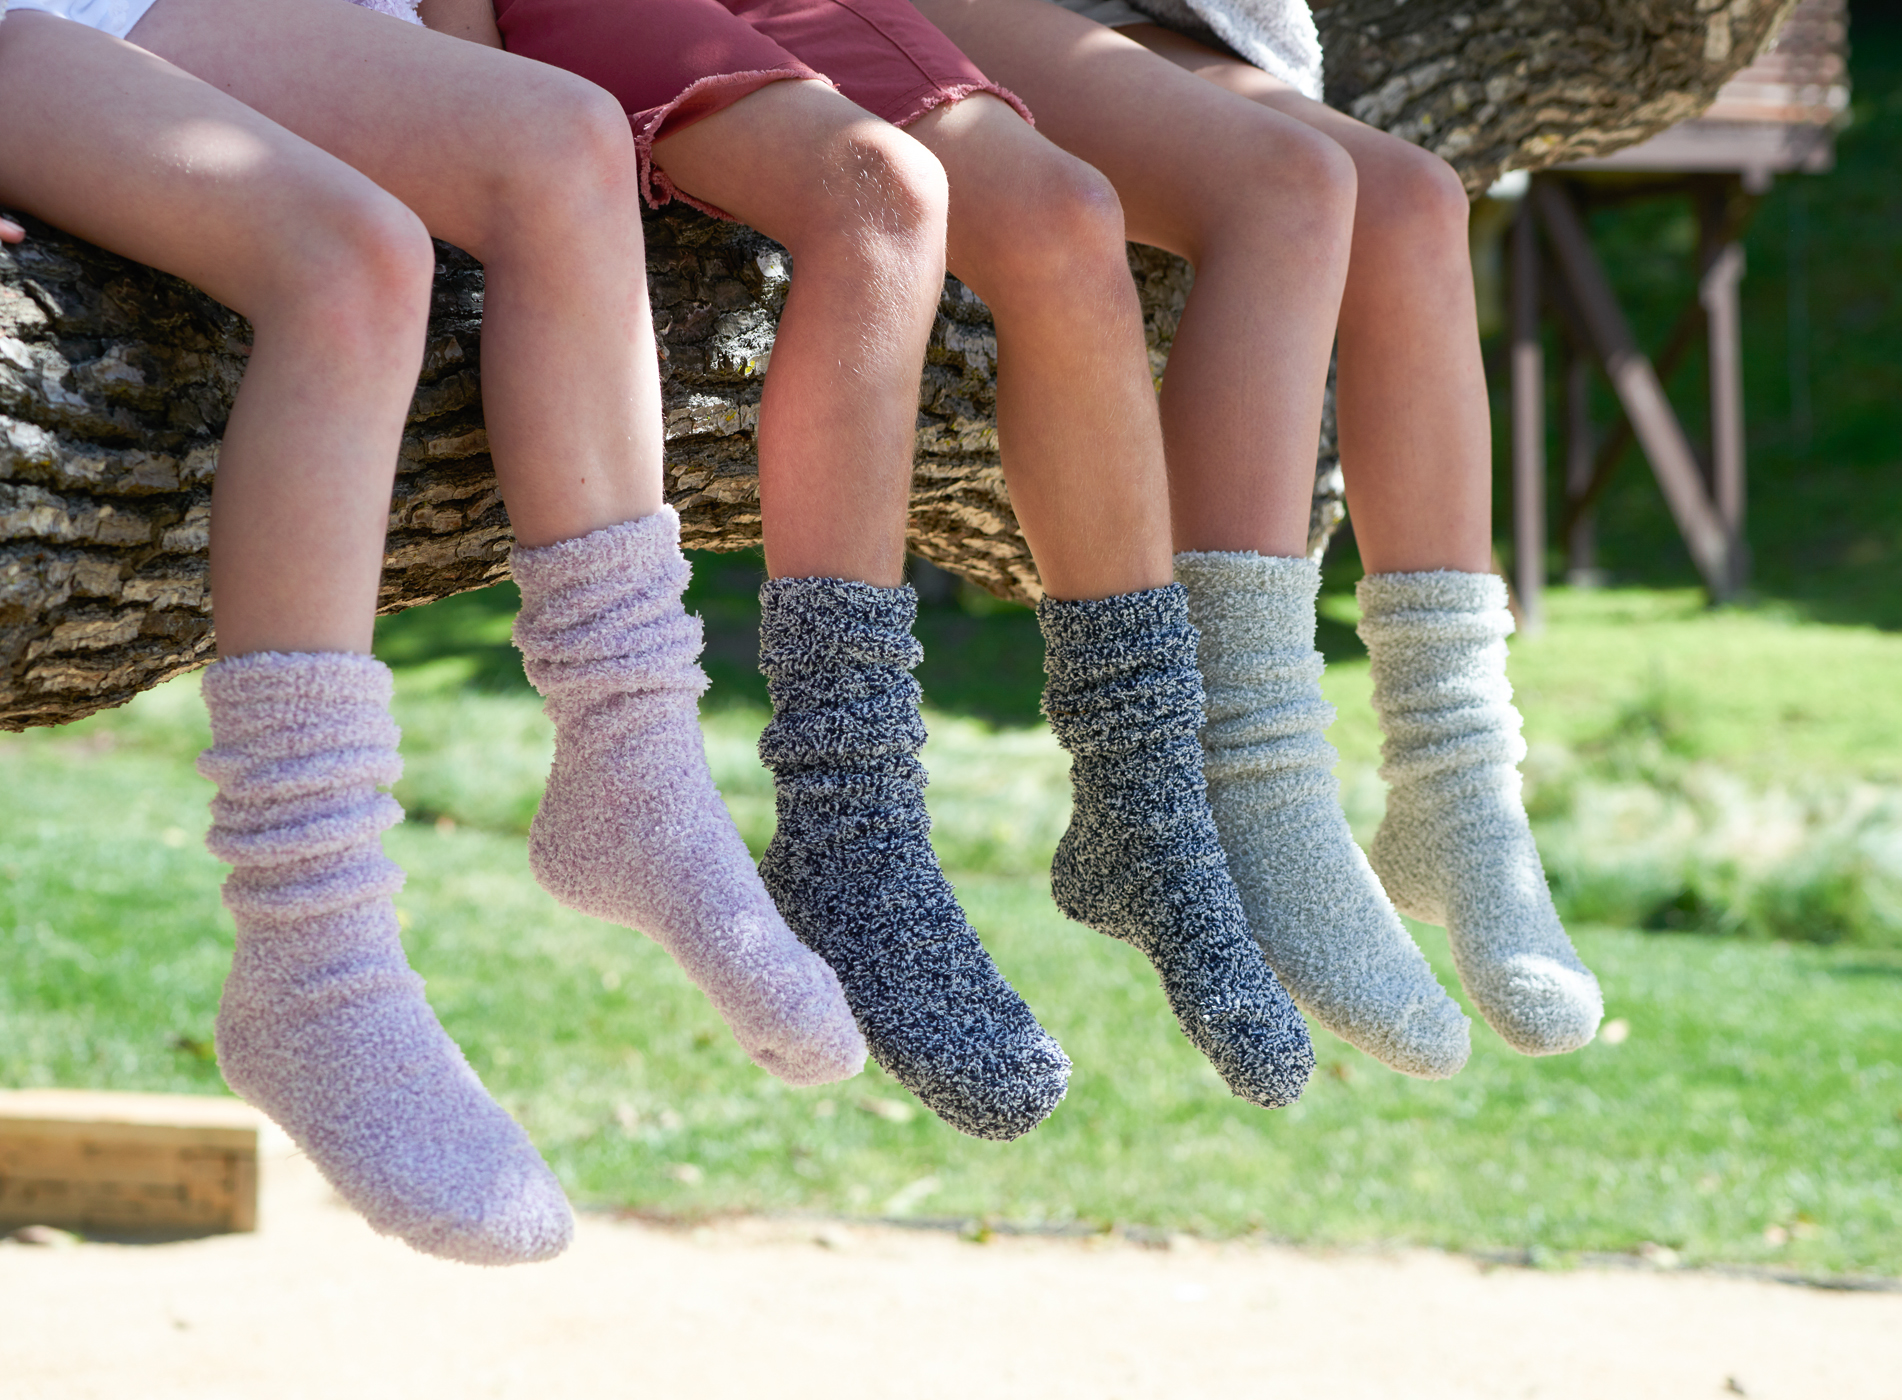 Barefoot Dreams CozyChic Heathered Plush Socks & Reviews